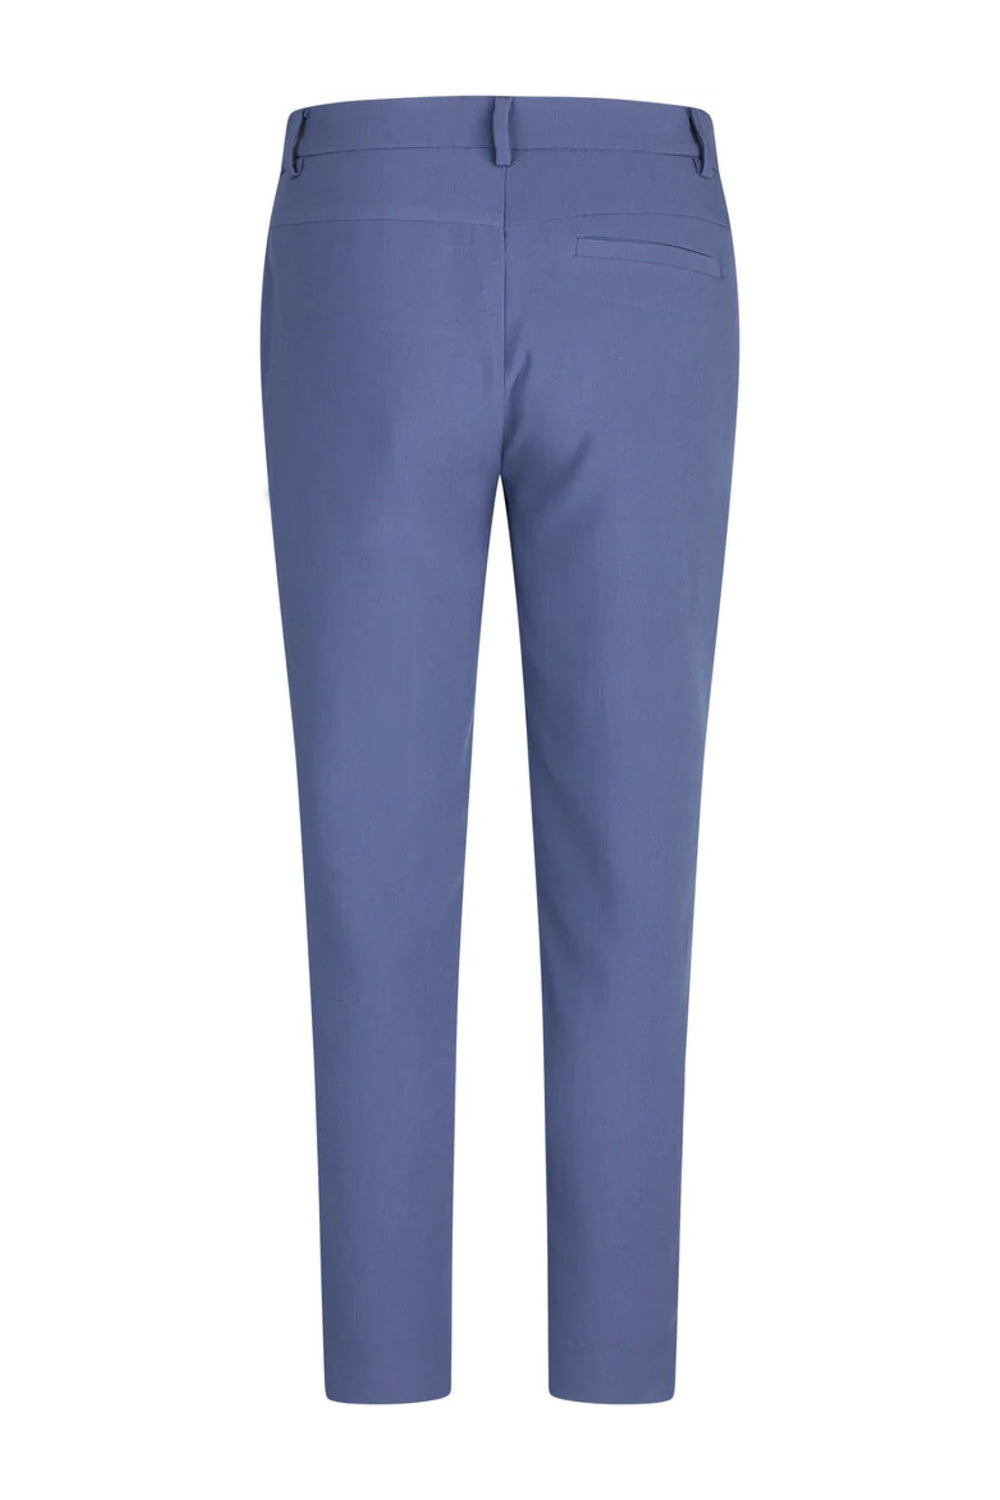 Bruuns Bazaar Women CindySusBBLinea pants Pants Blue Indigo